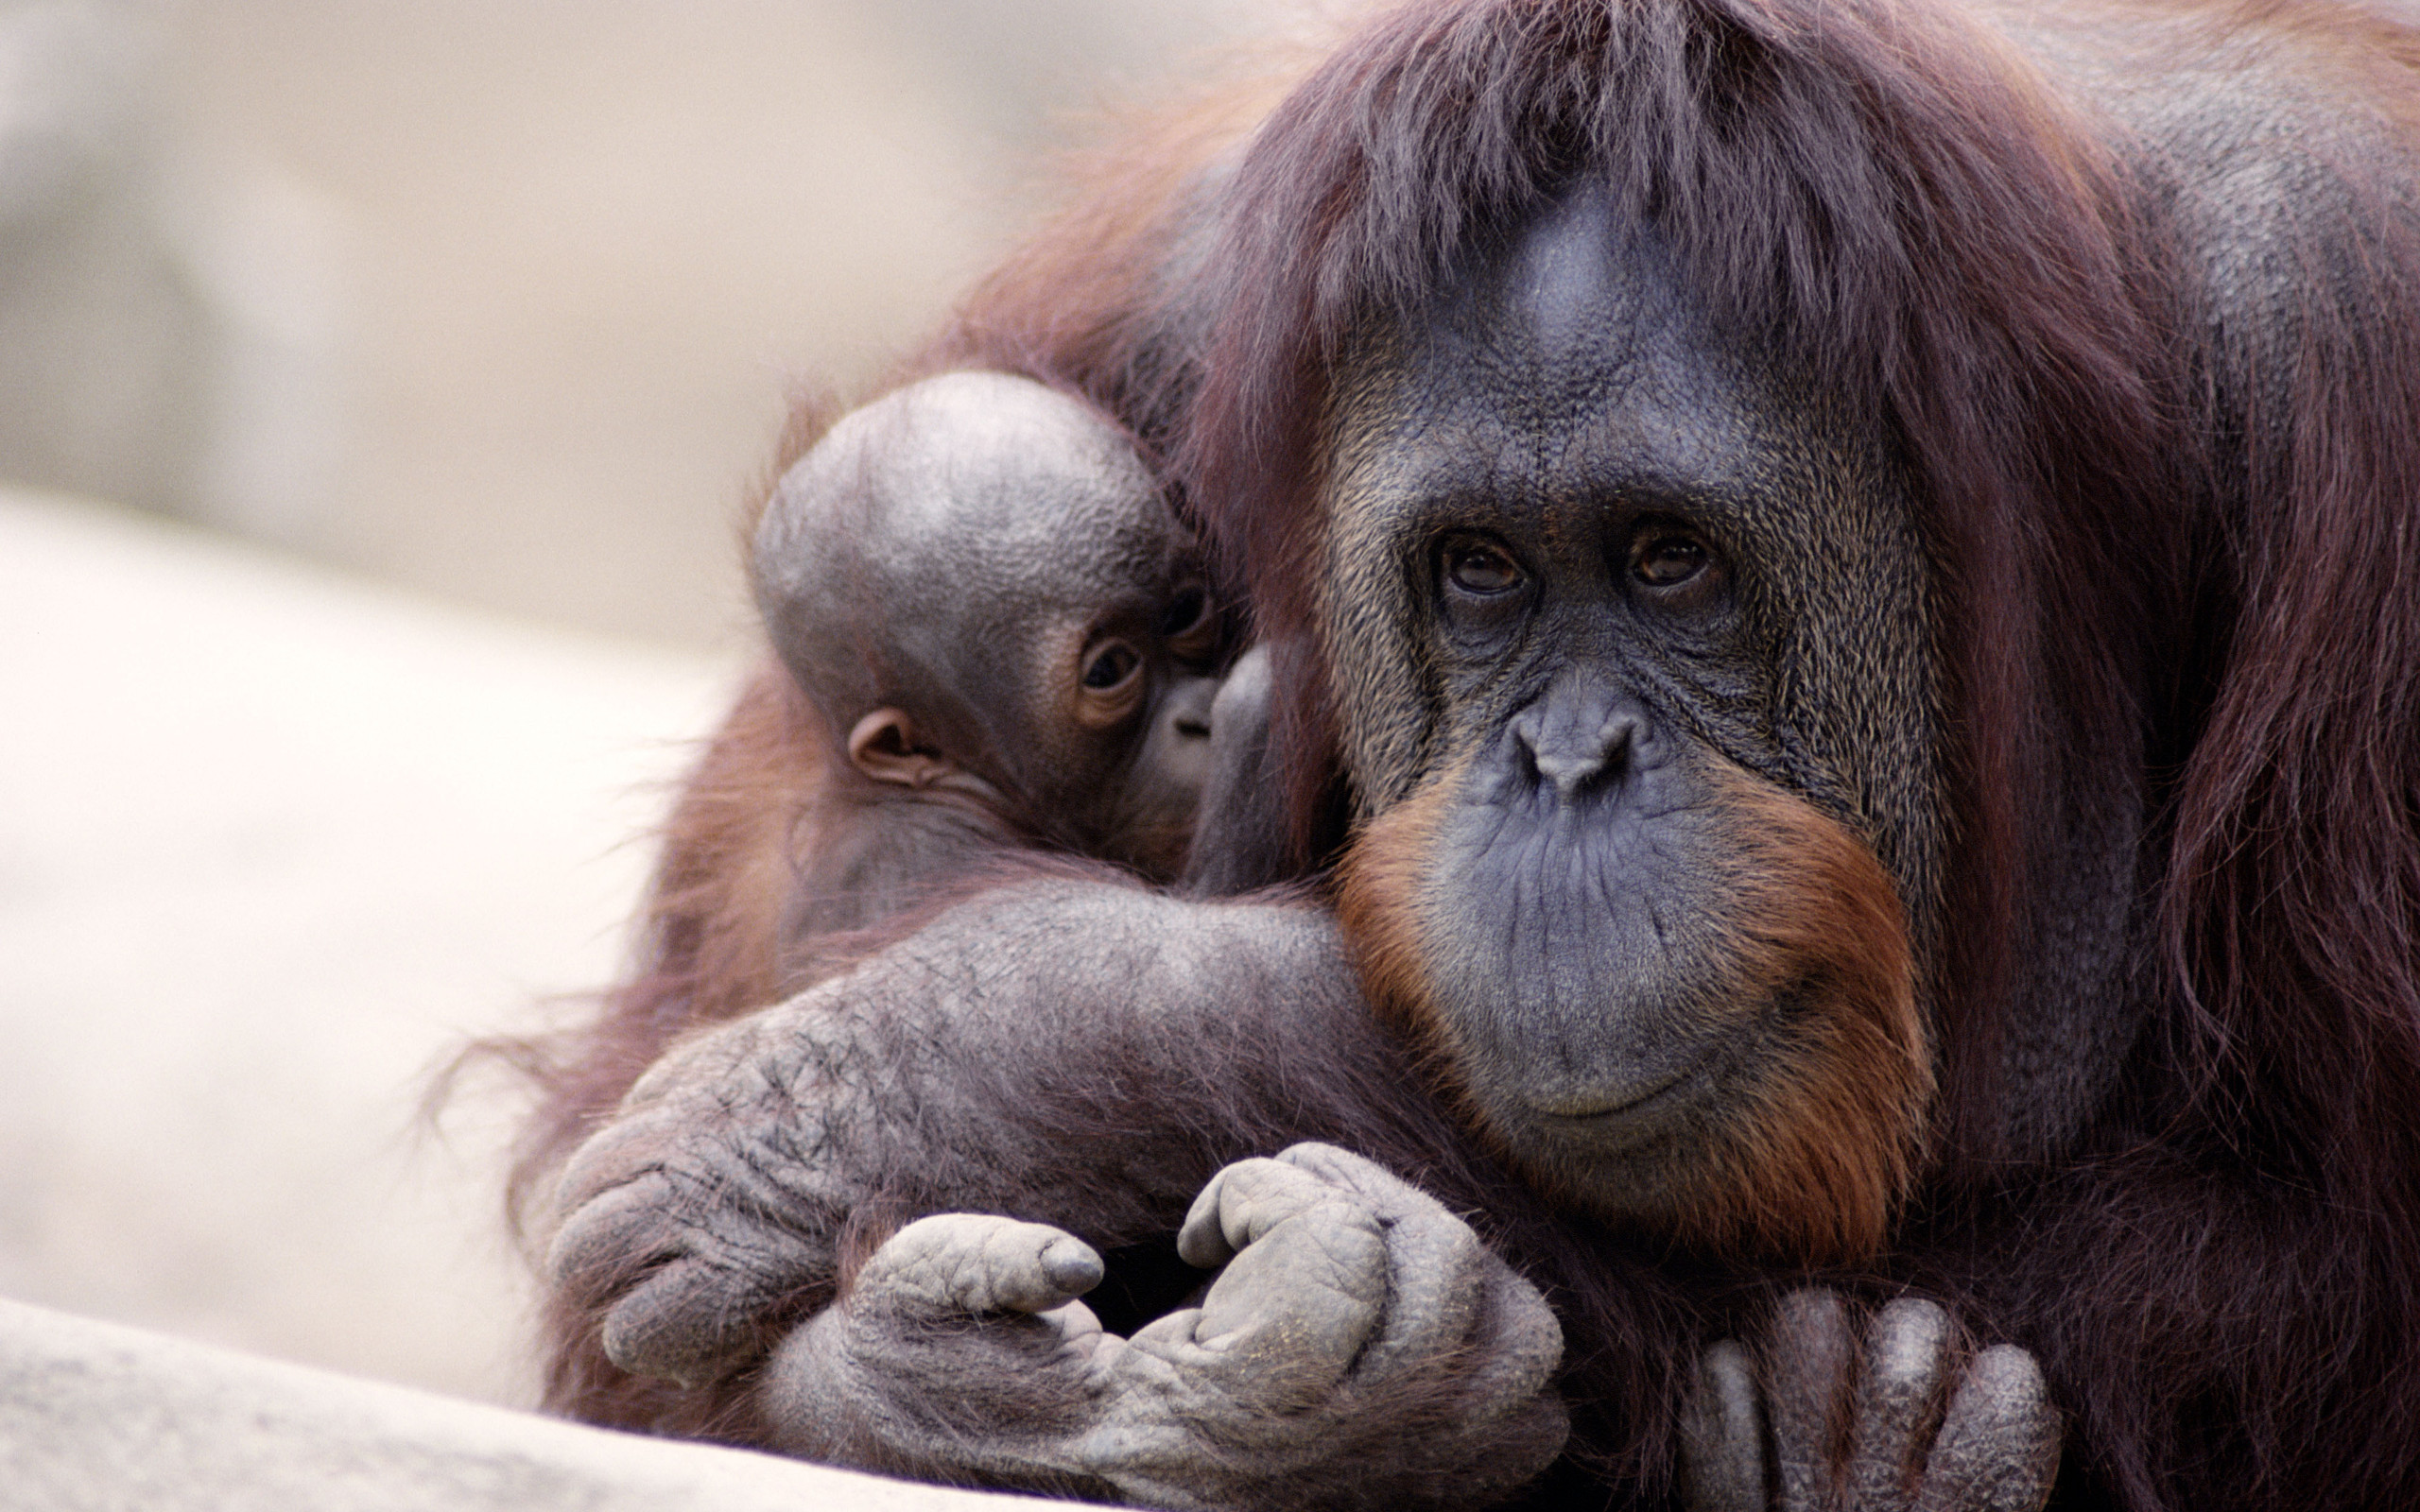 Animal Orangutan Wallpaper